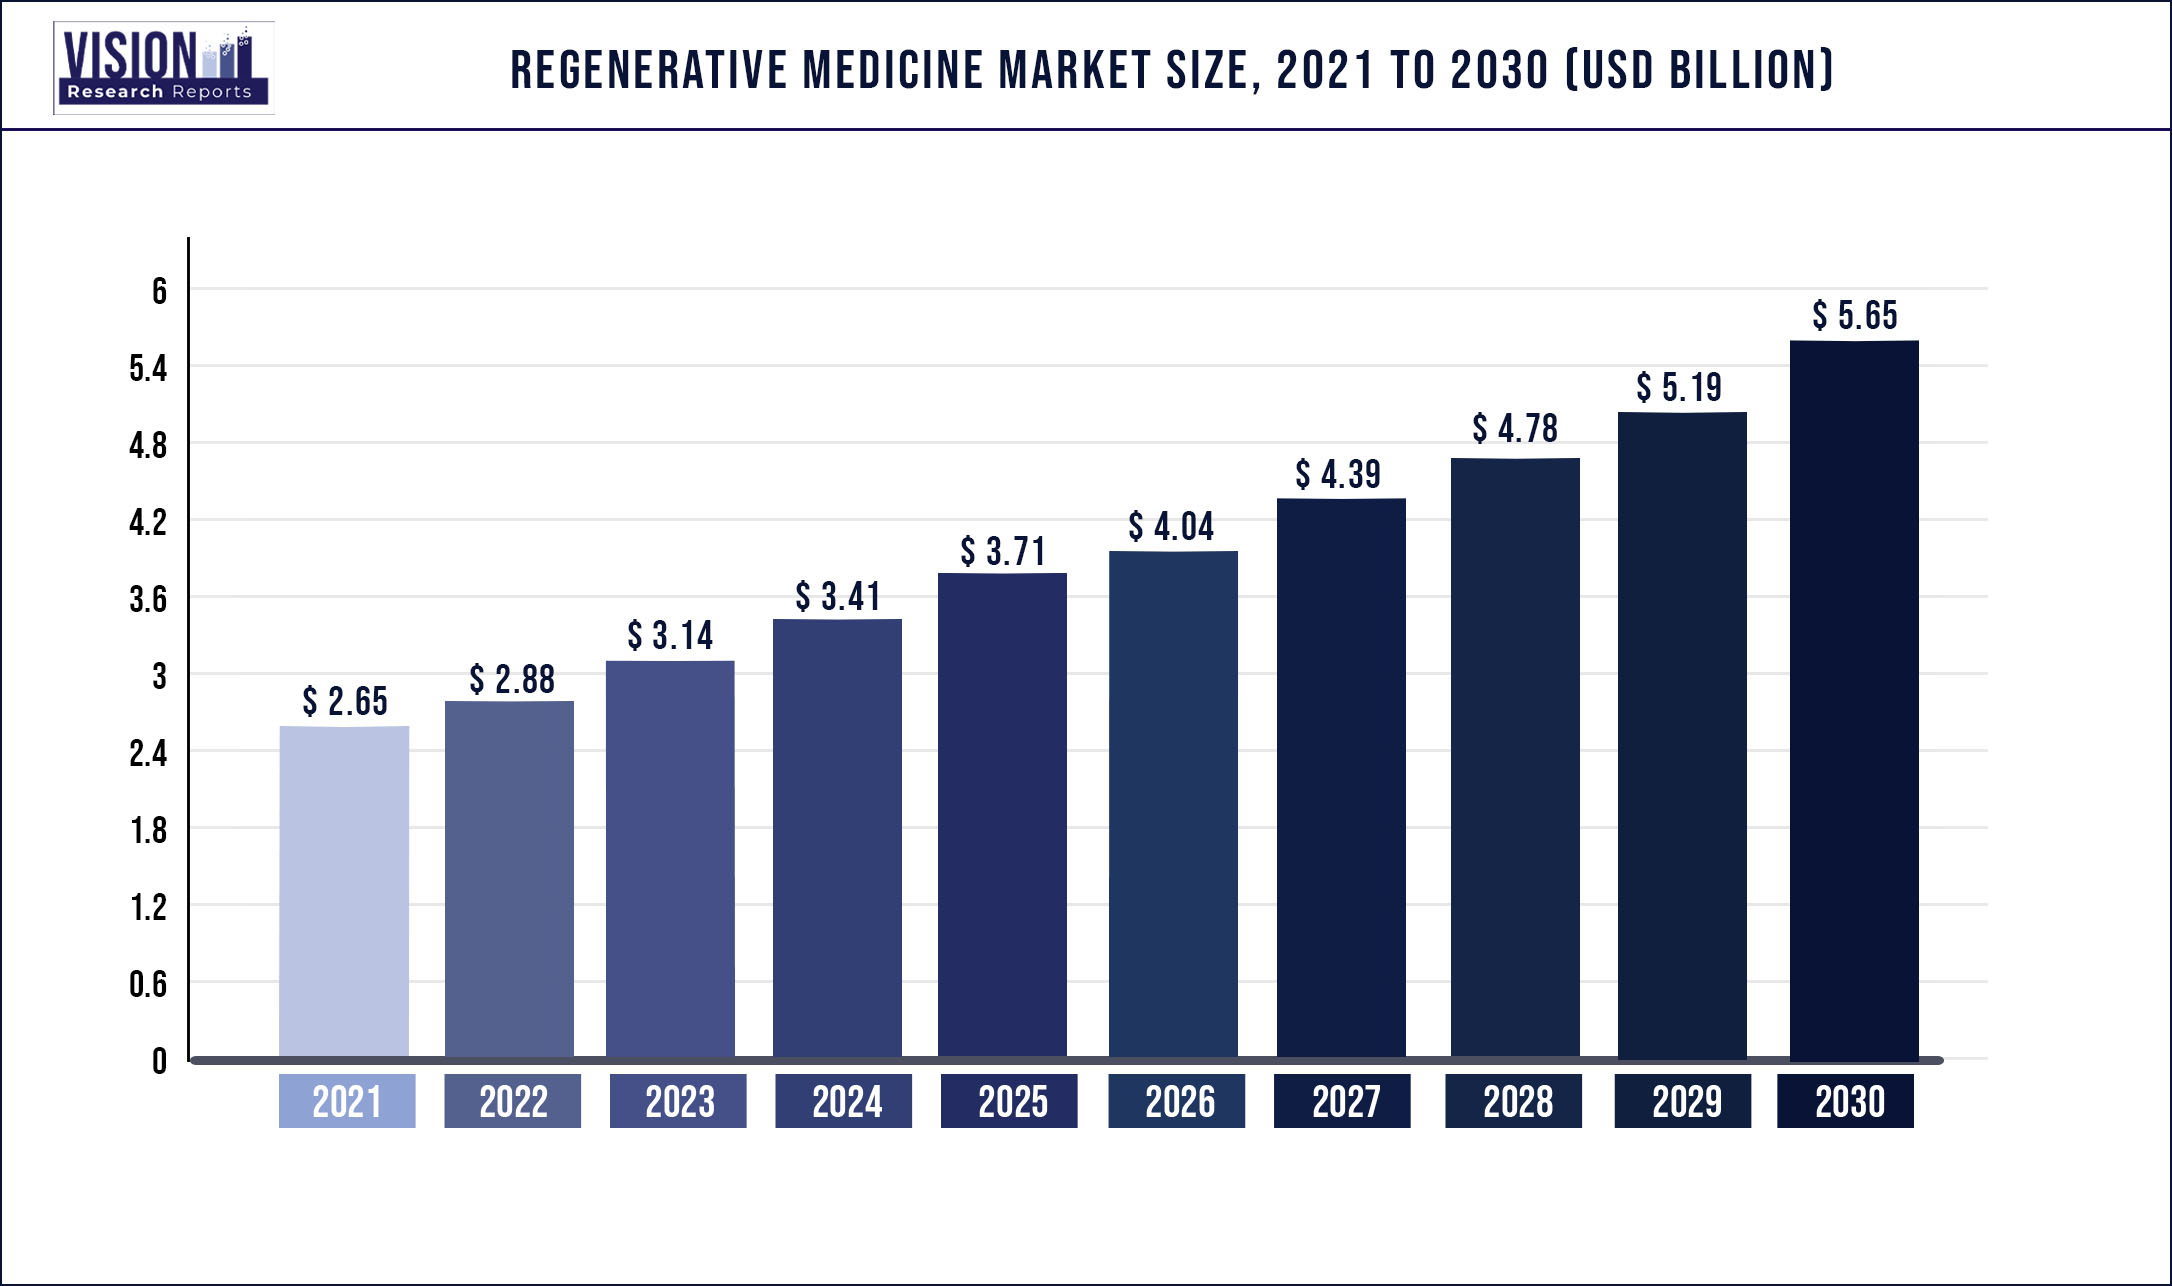 Regenerative Medicine Market Size 2021 to 2030